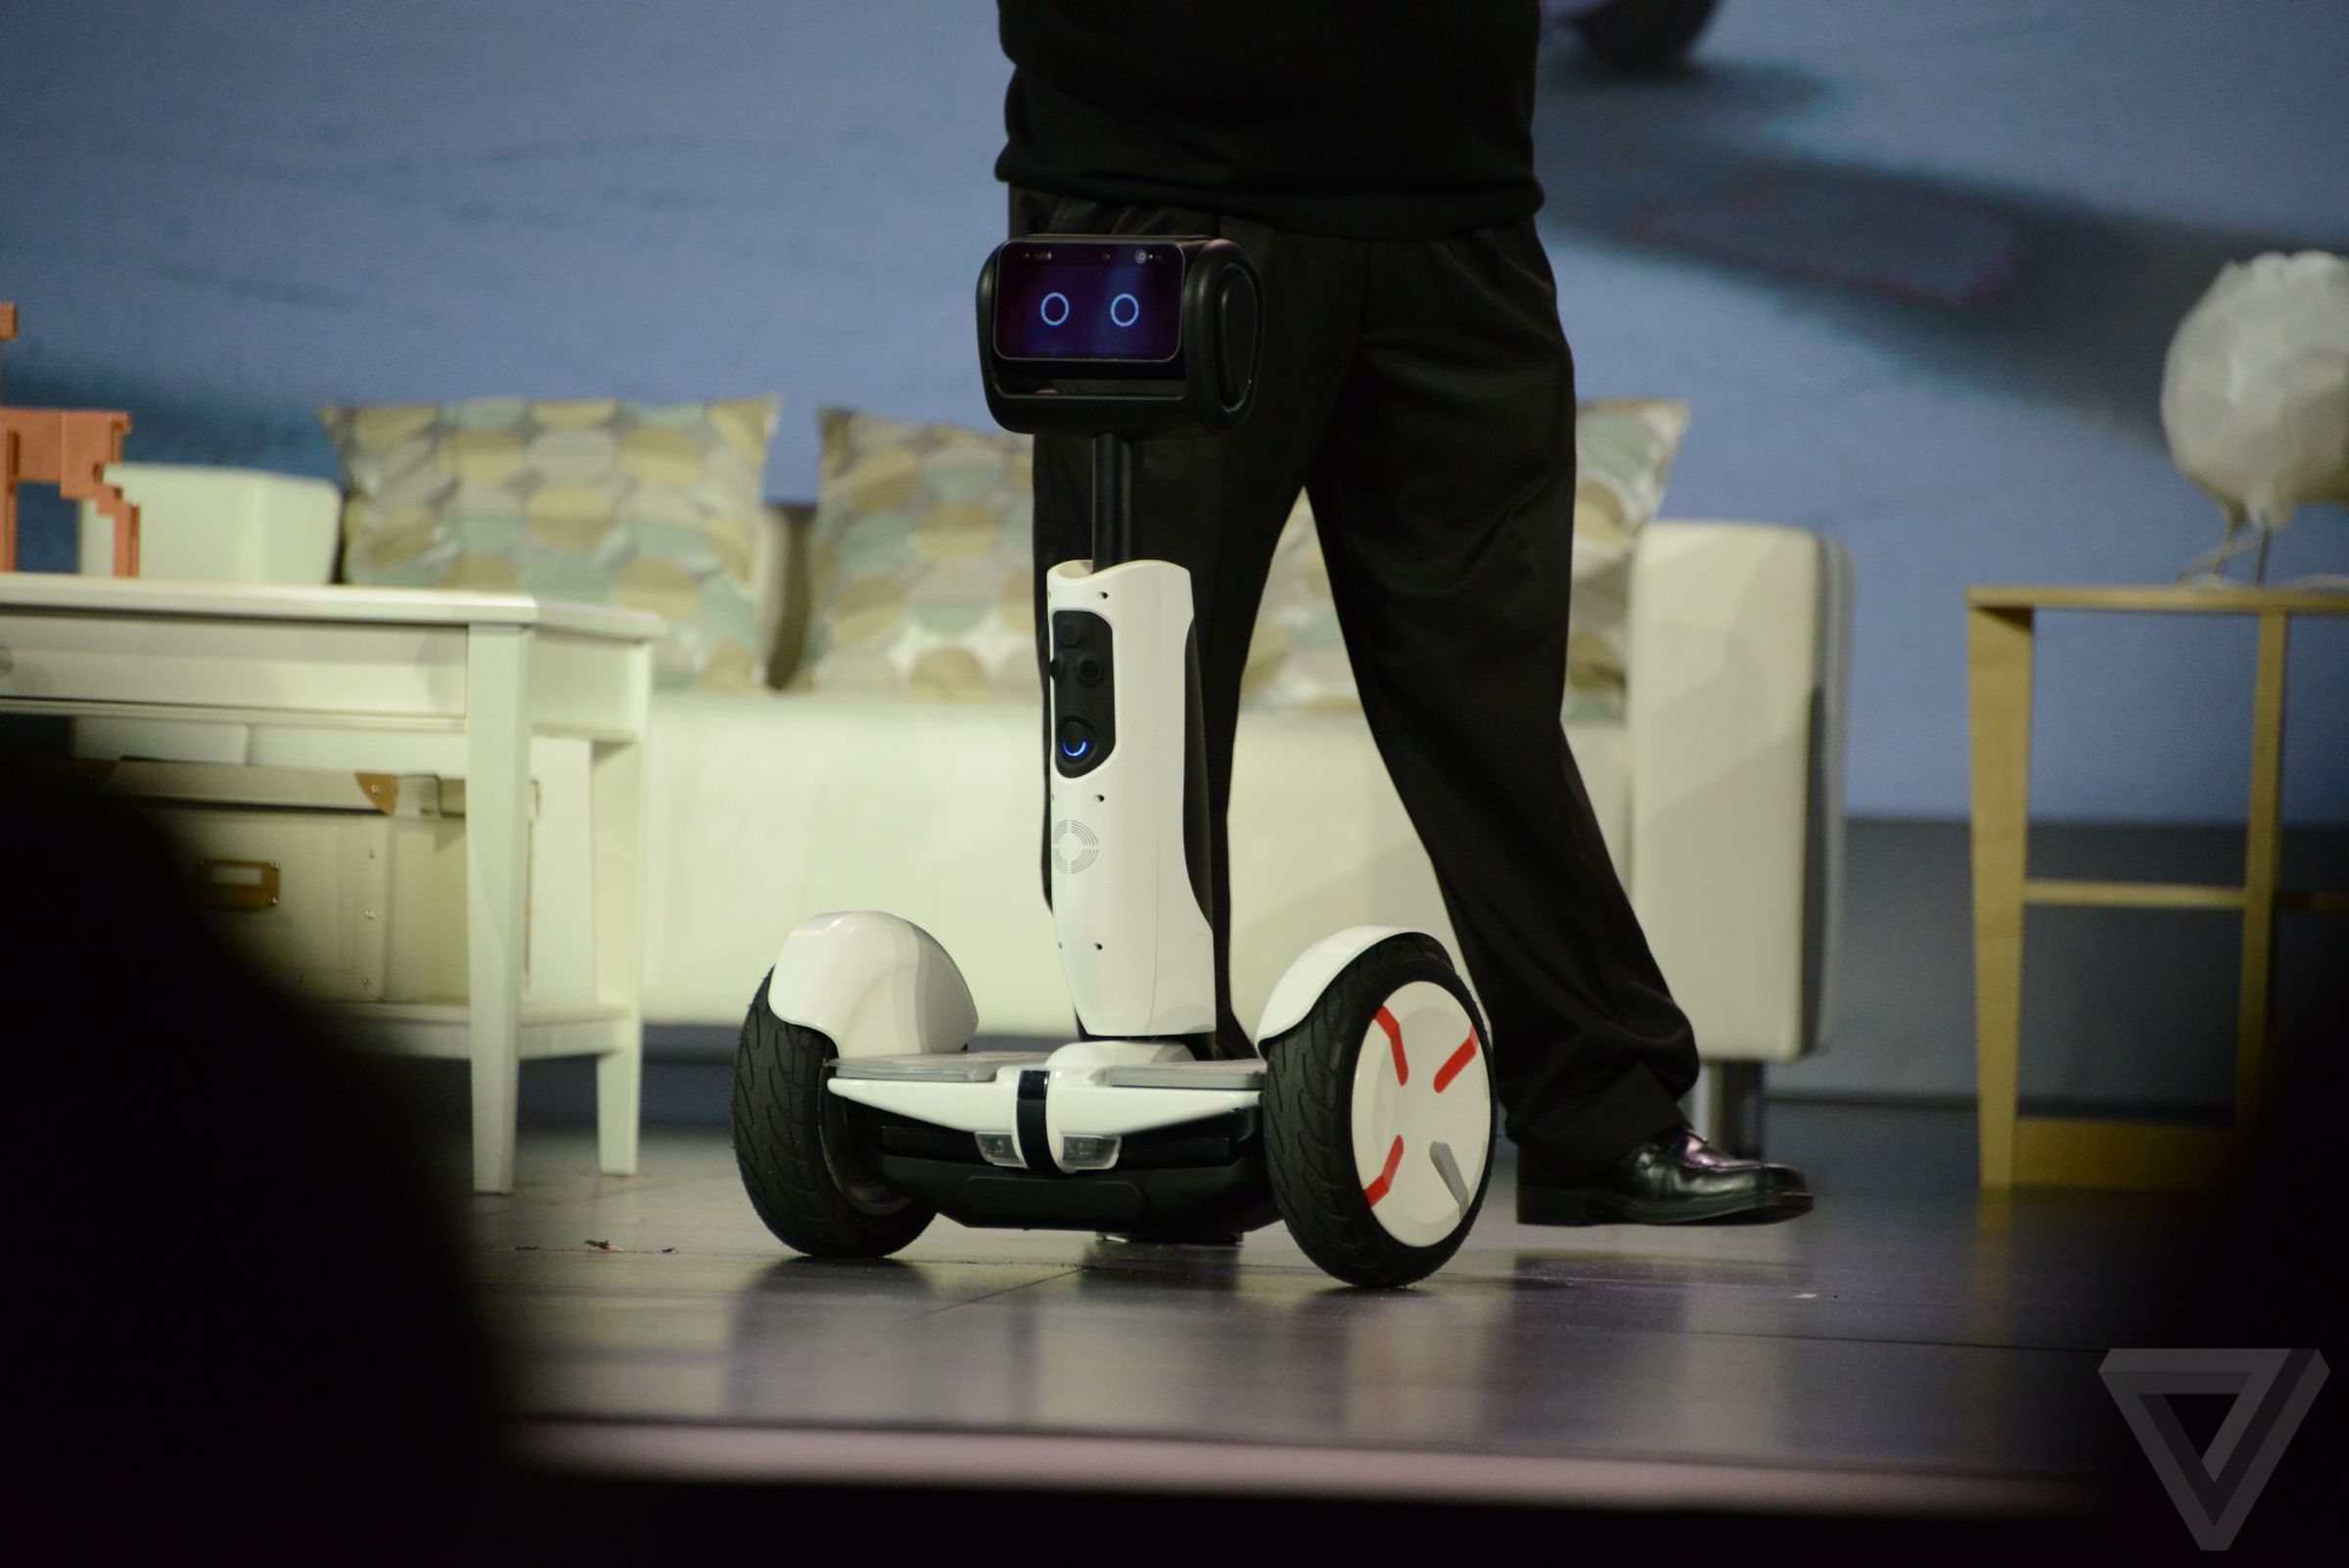 Intel's Segway robot hoverboard photos